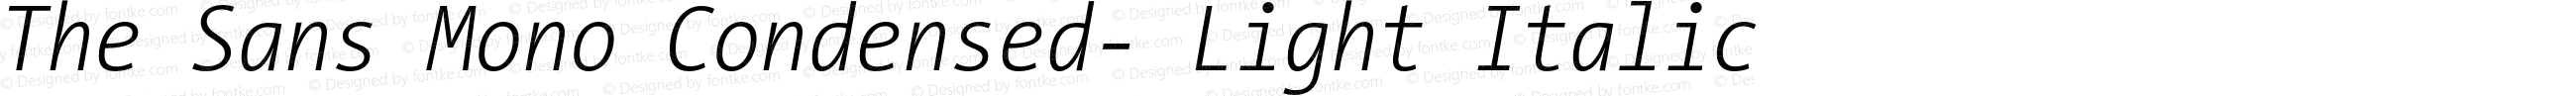 The Sans Mono Condensed- Light Italic